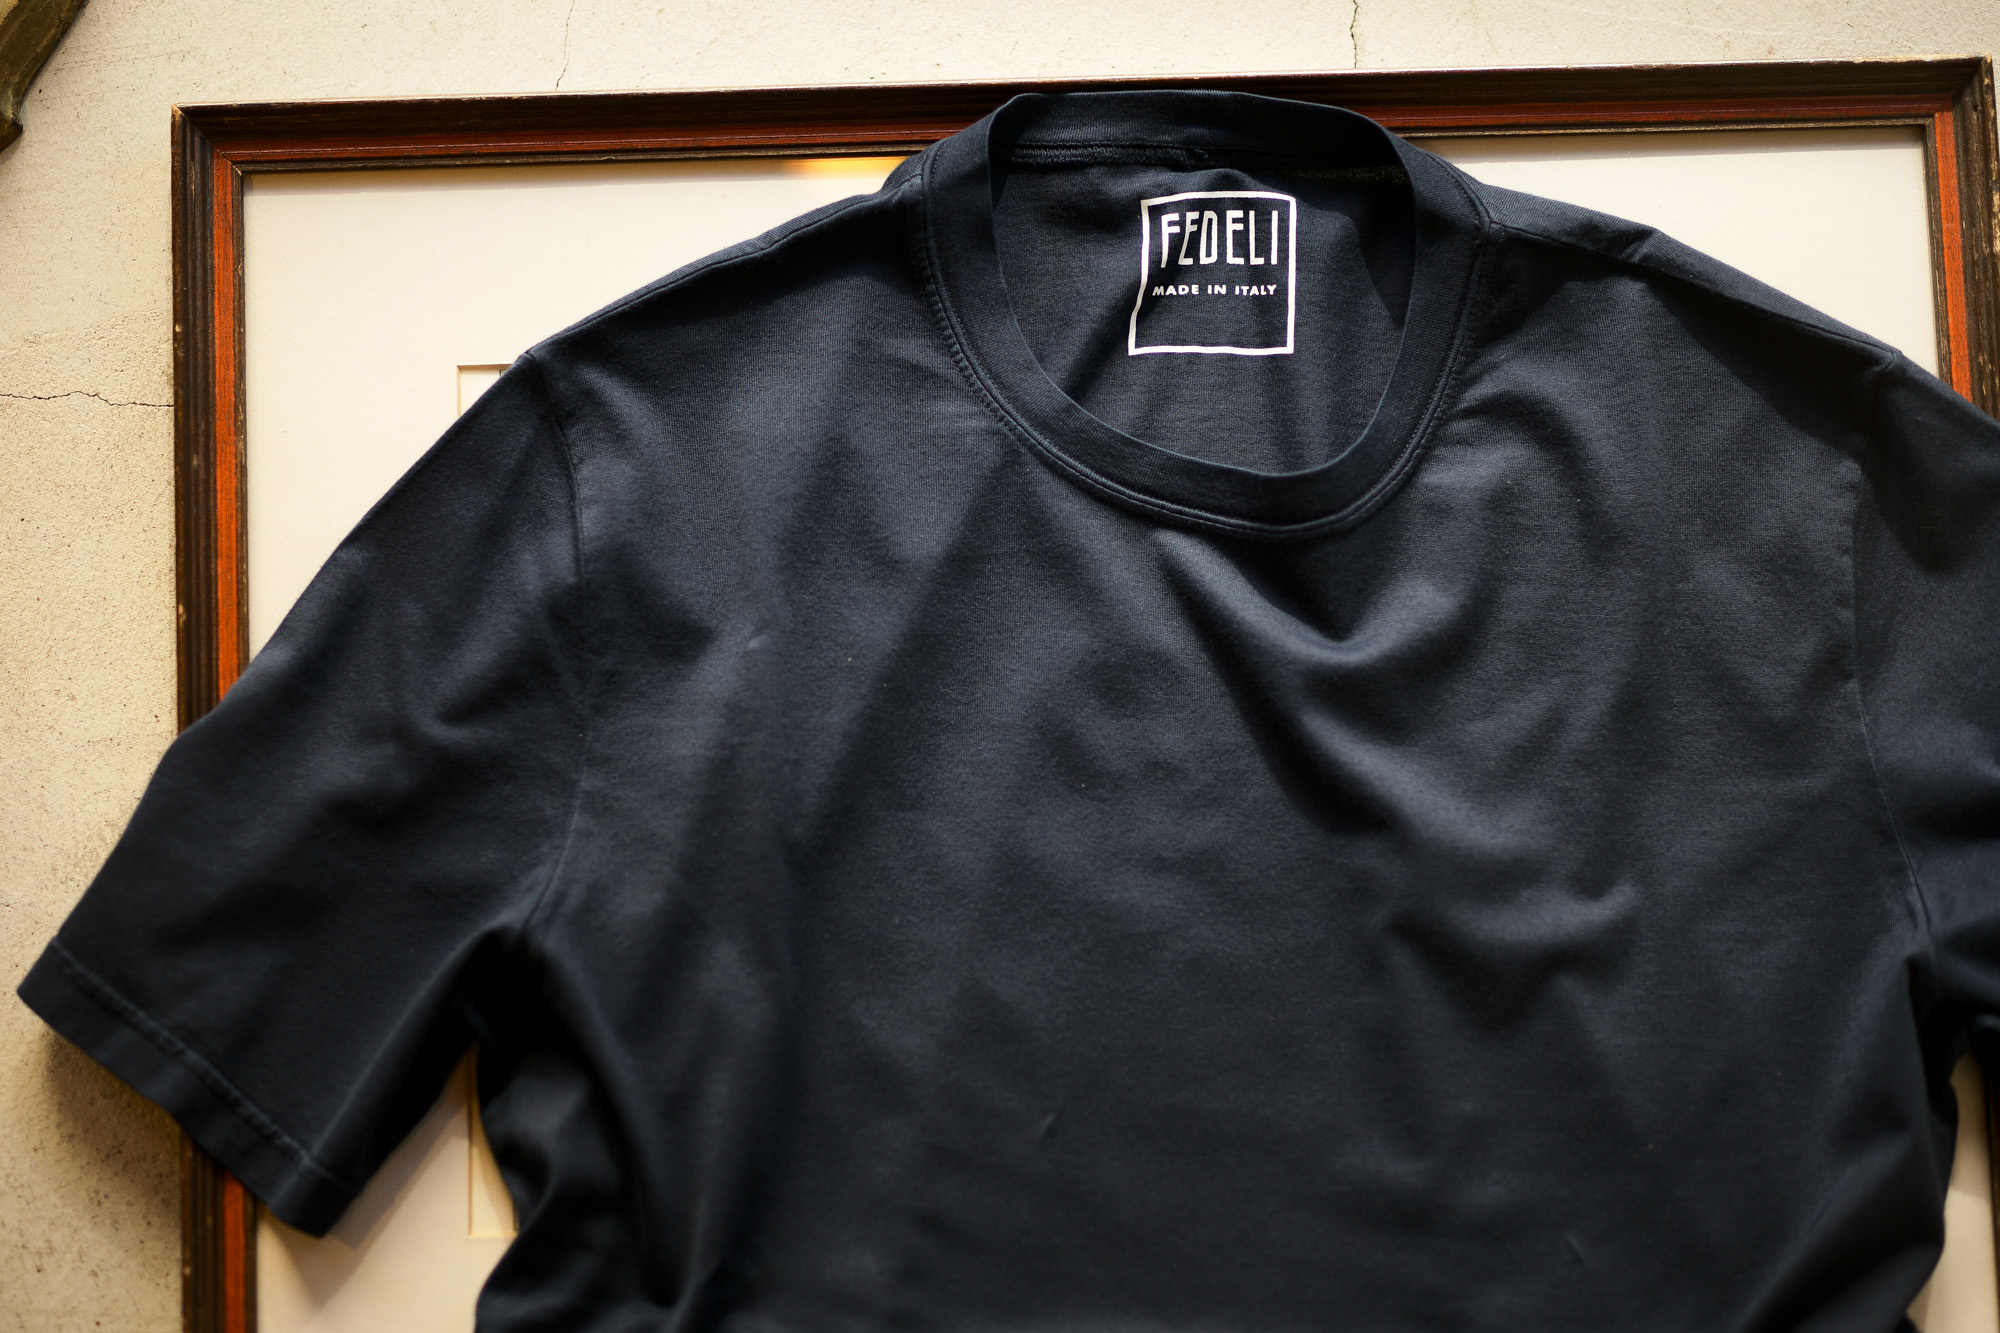 FEDELI(フェデーリ) Crew Neck T-shirt (クルーネック Tシャツ) ギザコットン Tシャツ NAVY (ネイビー・626) made in italy (イタリア製) 2020 春夏 【ご予約受付中】愛知 名古屋 altoediritto アルトエデリット TEE